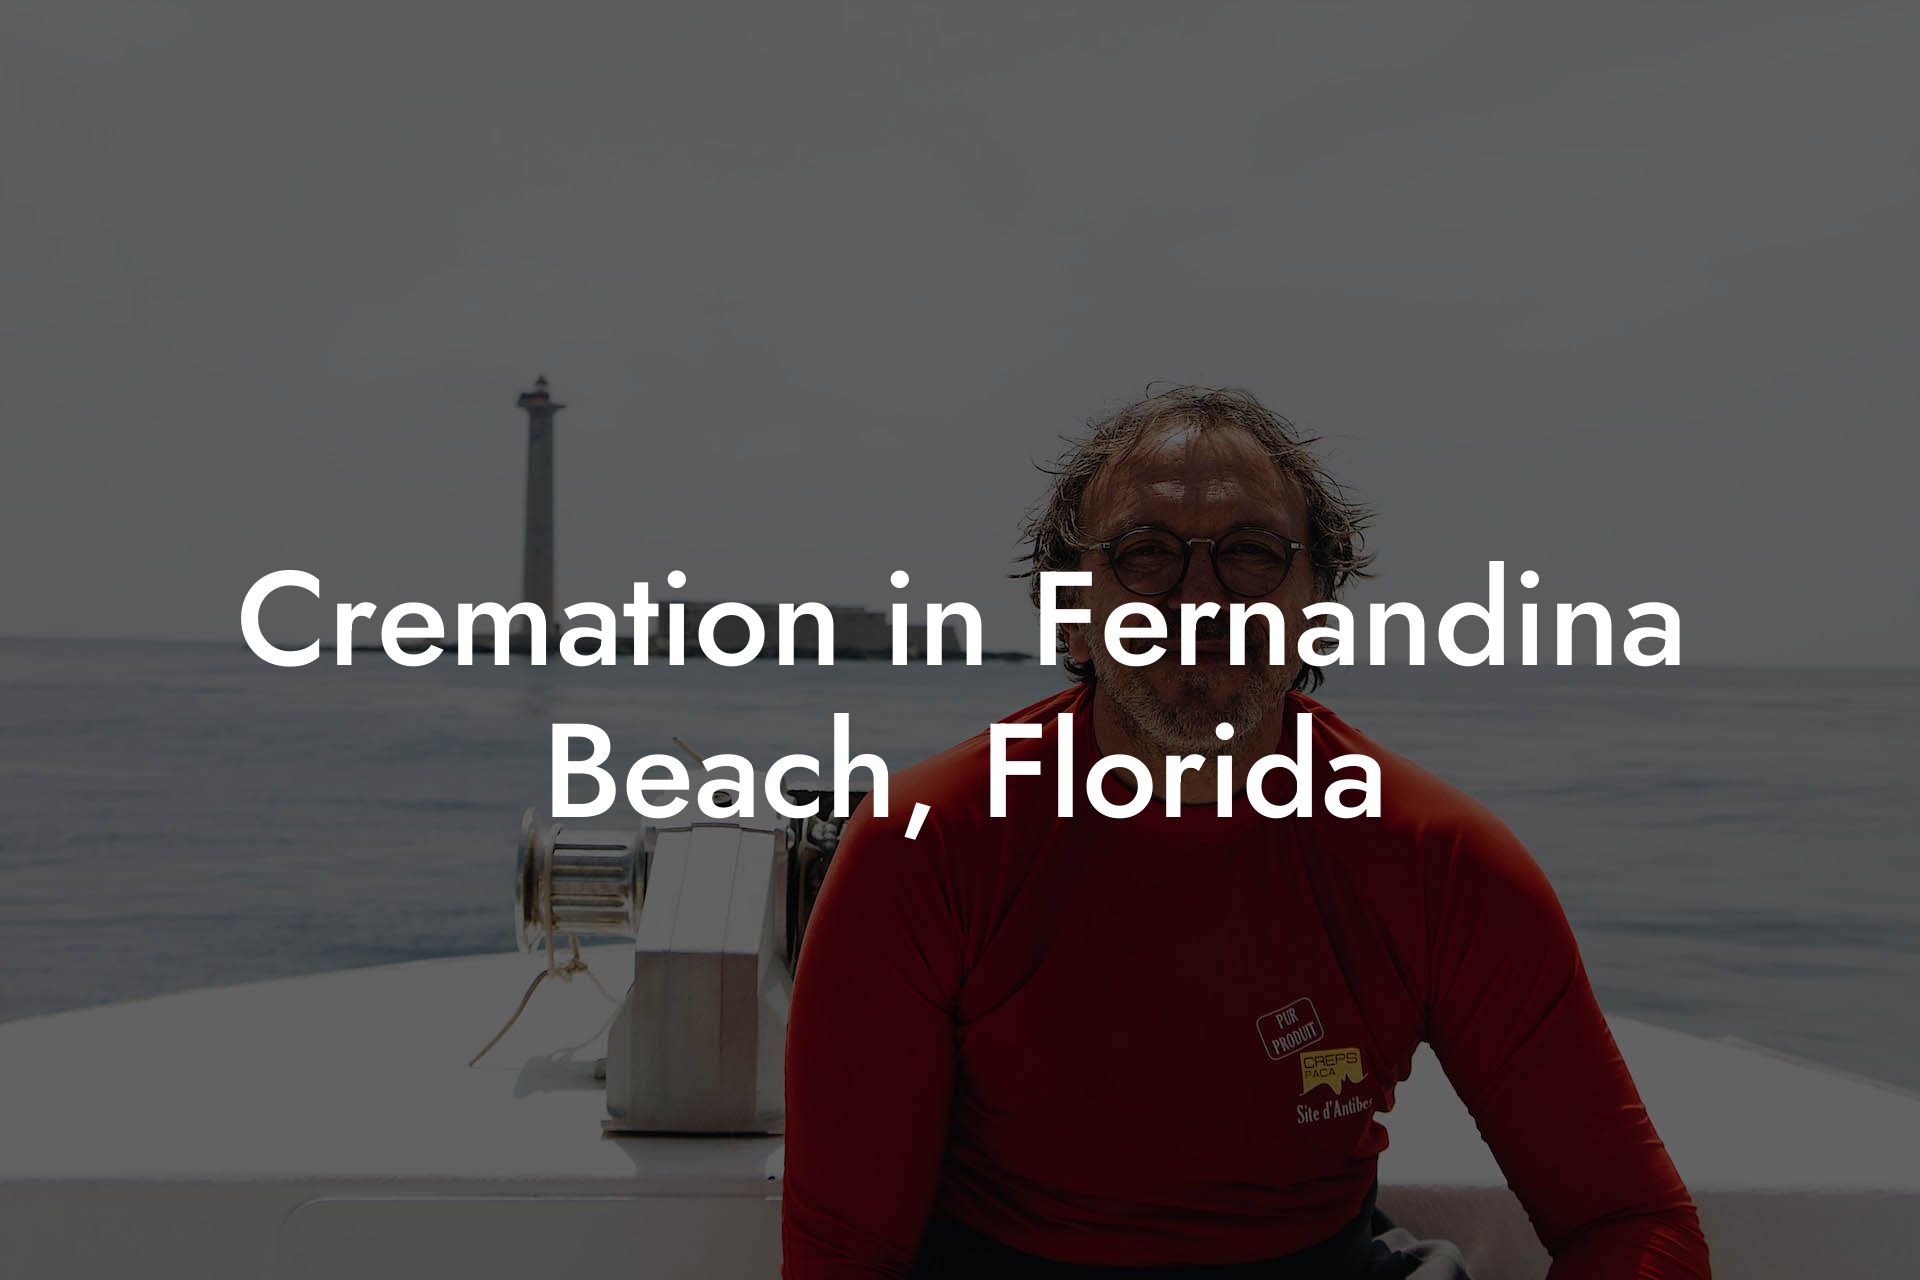 Cremation in Fernandina Beach, Florida